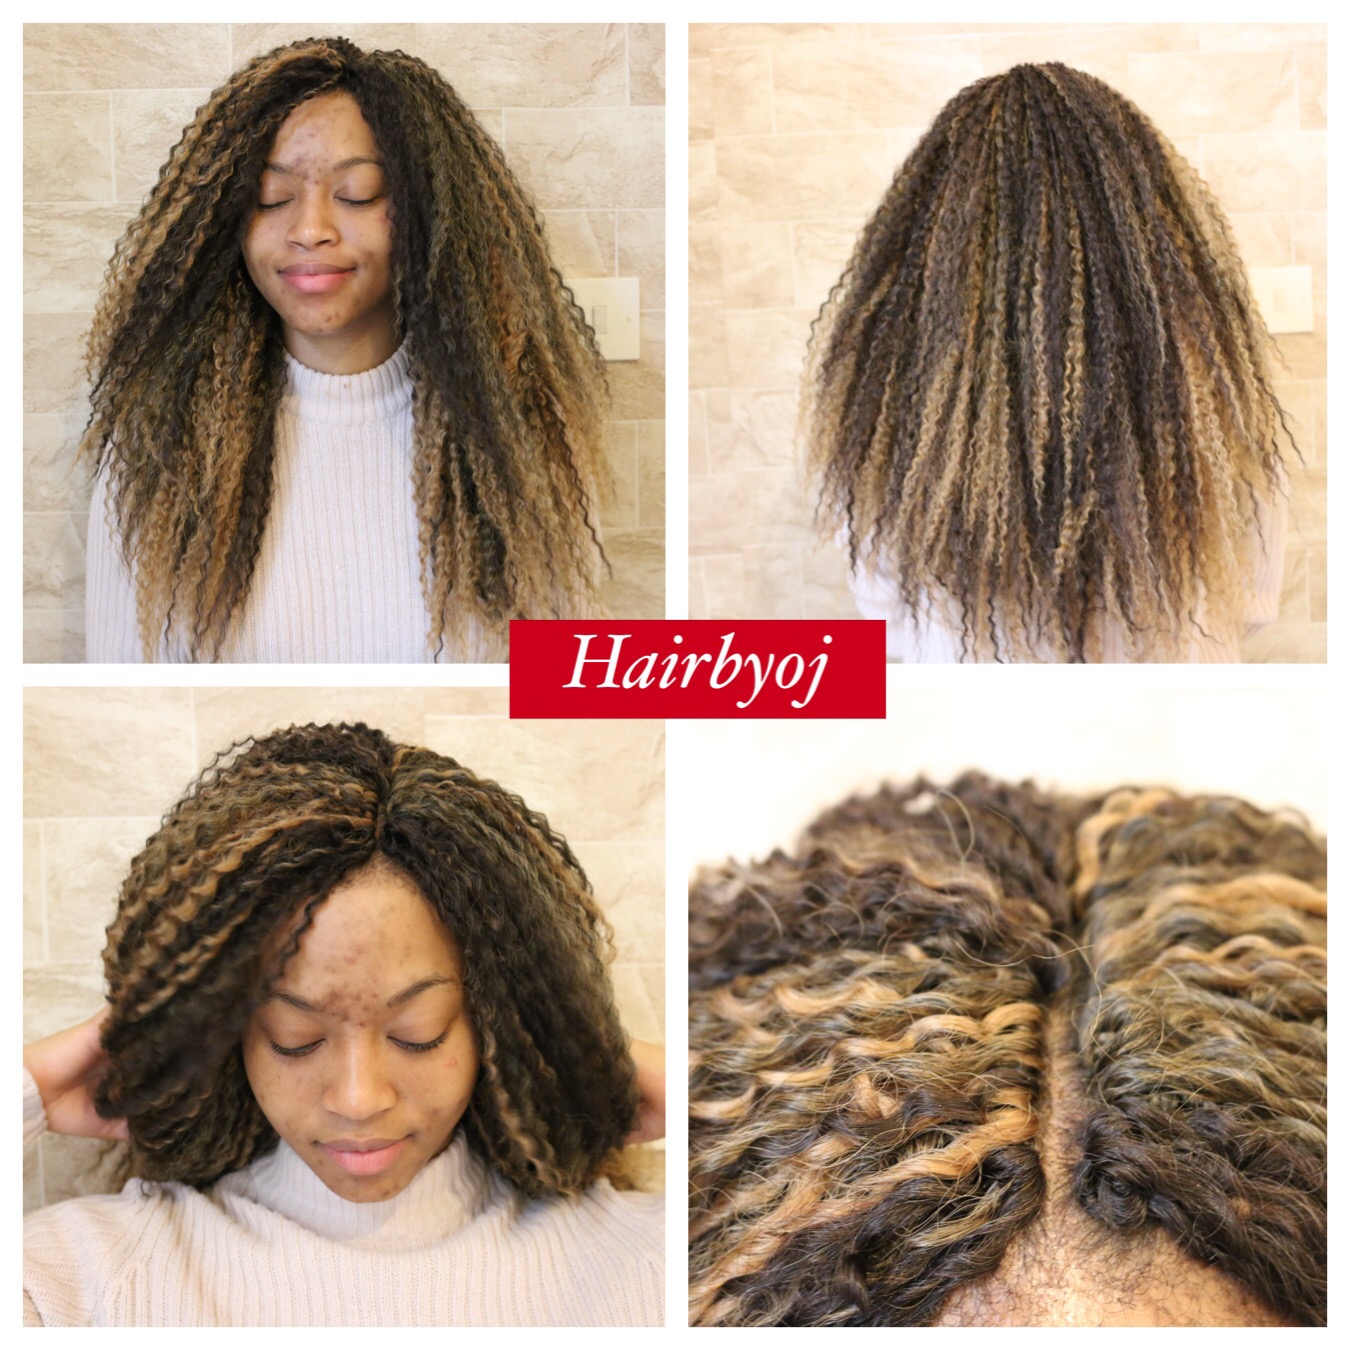 Chest length crimp style curls crochet braids with brown/ blonde colour  blend. « hairbyoj